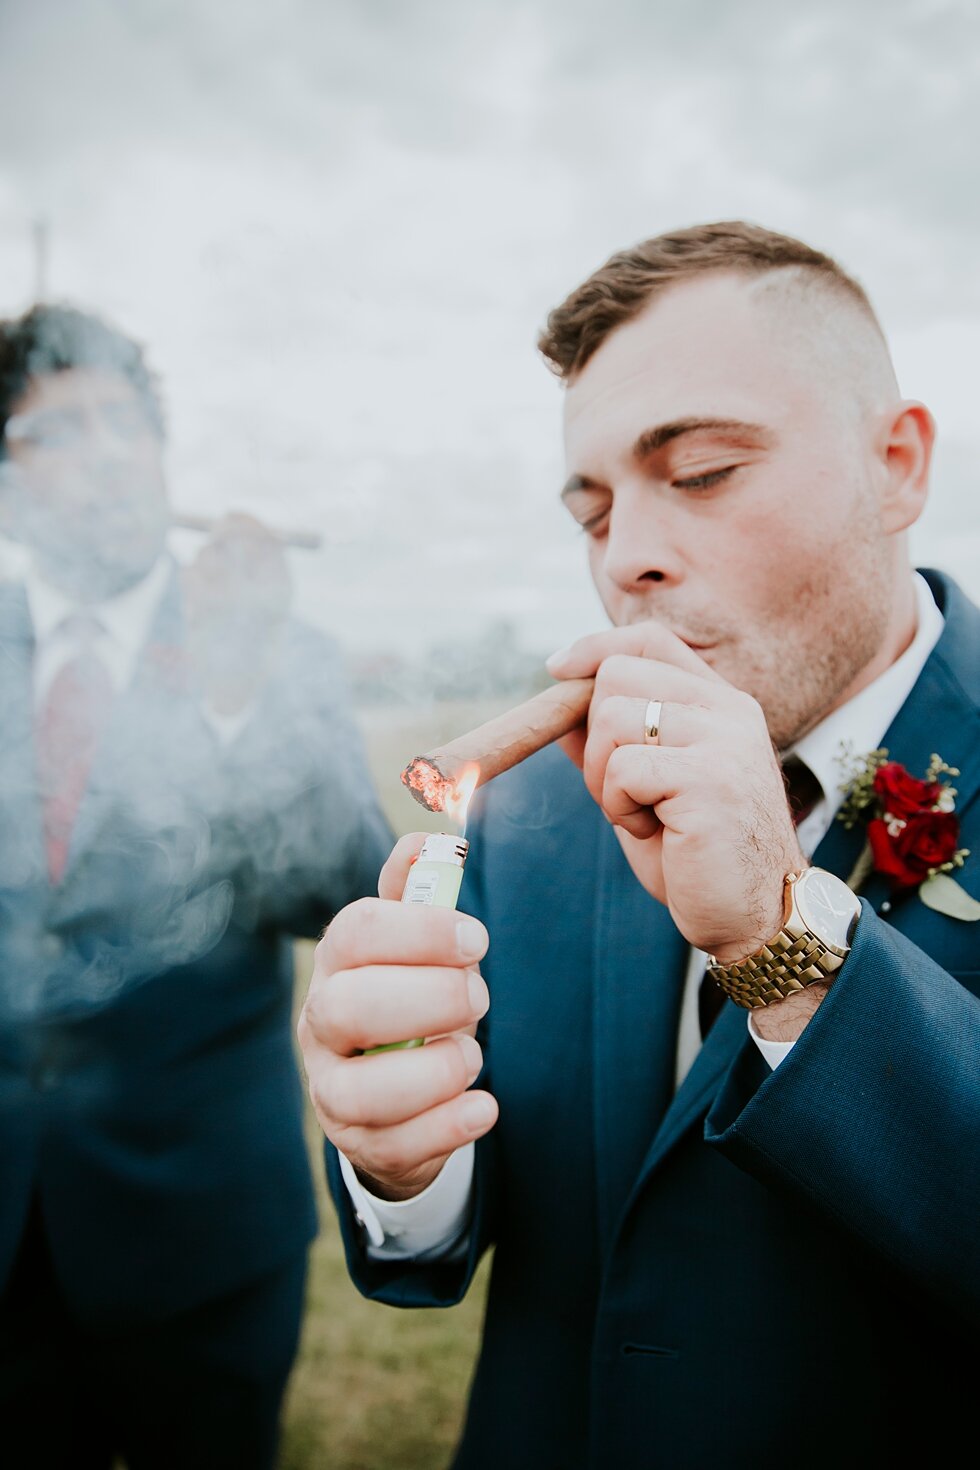  Groom smoking cigar on wedding day  #thatsdarling #weddingday #weddinginspiration #weddingphoto #love #justmarried #midwestphotographer #kywedding #louisville #kentuckywedding #louisvillekyweddingphotographer #weddingbliss #weddingformals #loveisint